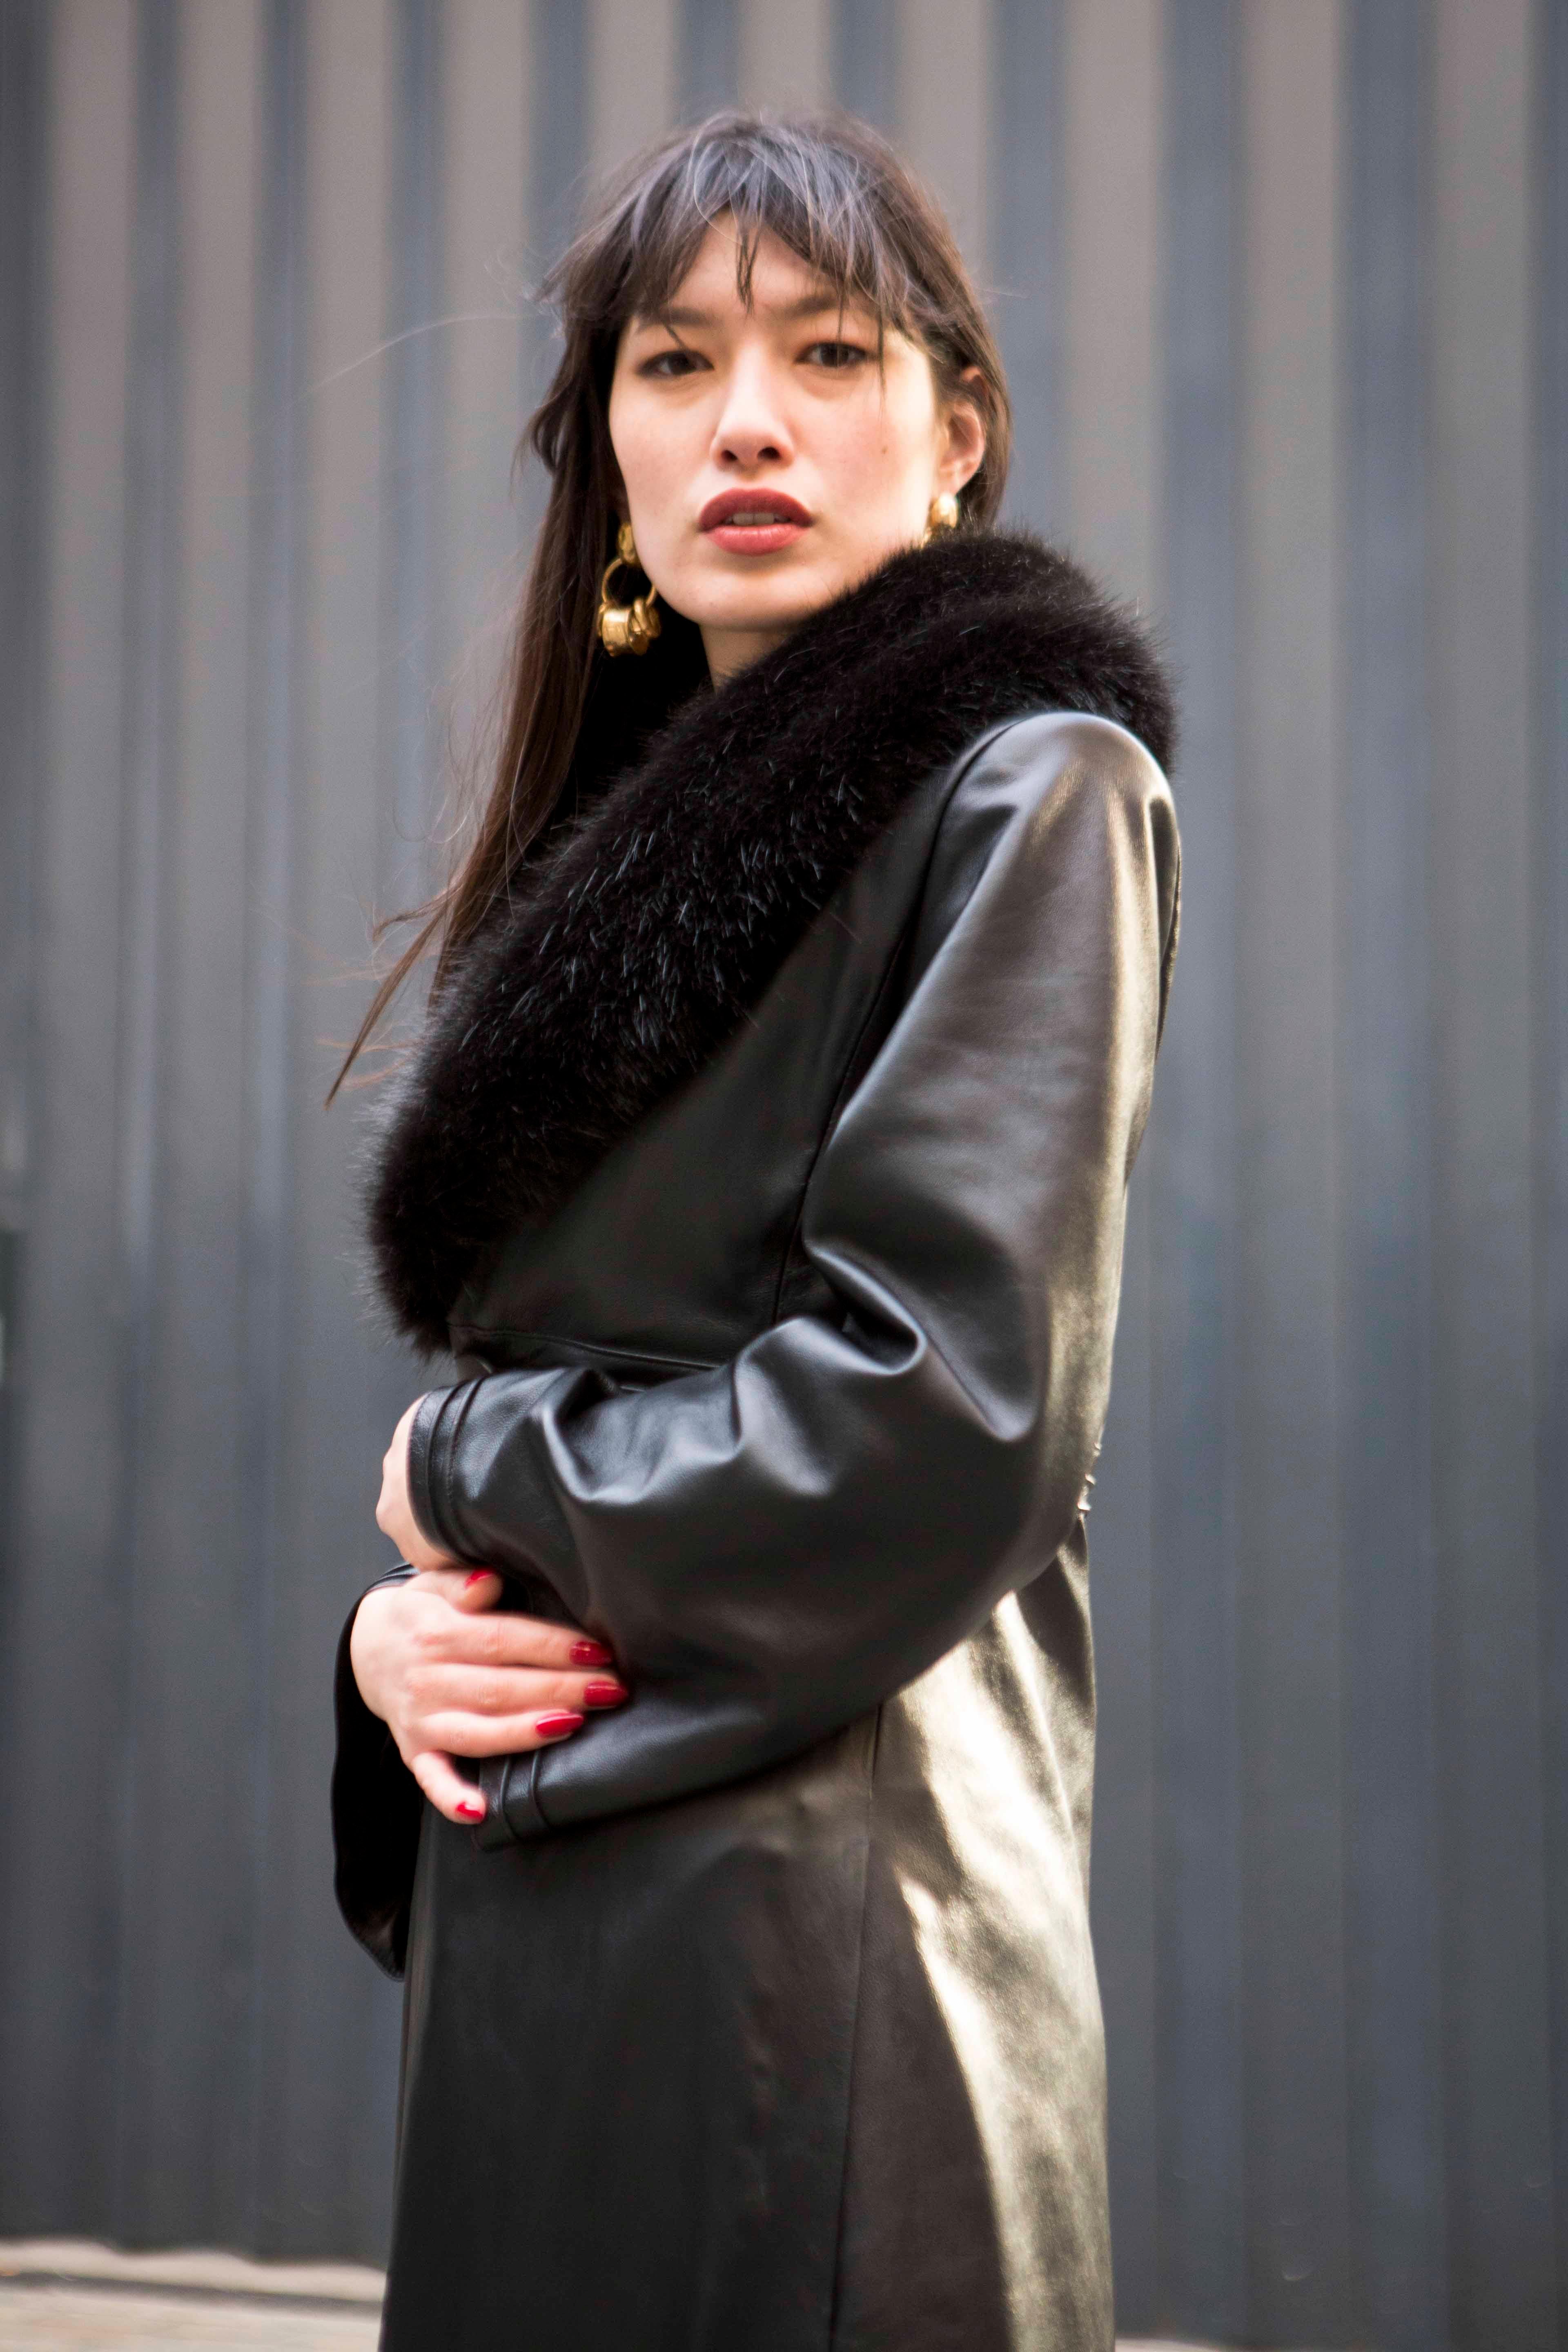 Verheyen London Edward Leather Coat with Faux Fur Collar in Black - Size uk 12 For Sale 12